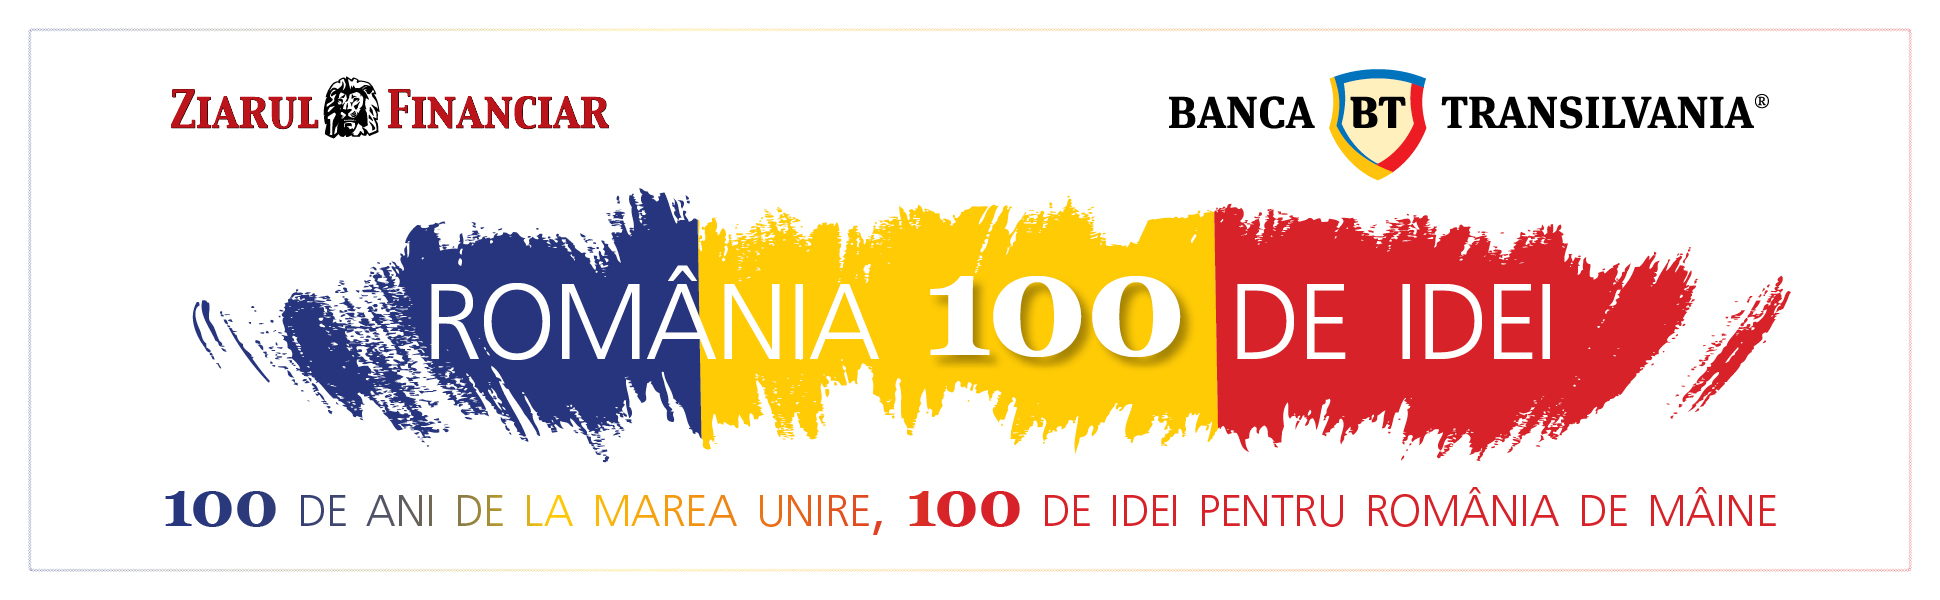 ZF România 100 de idei